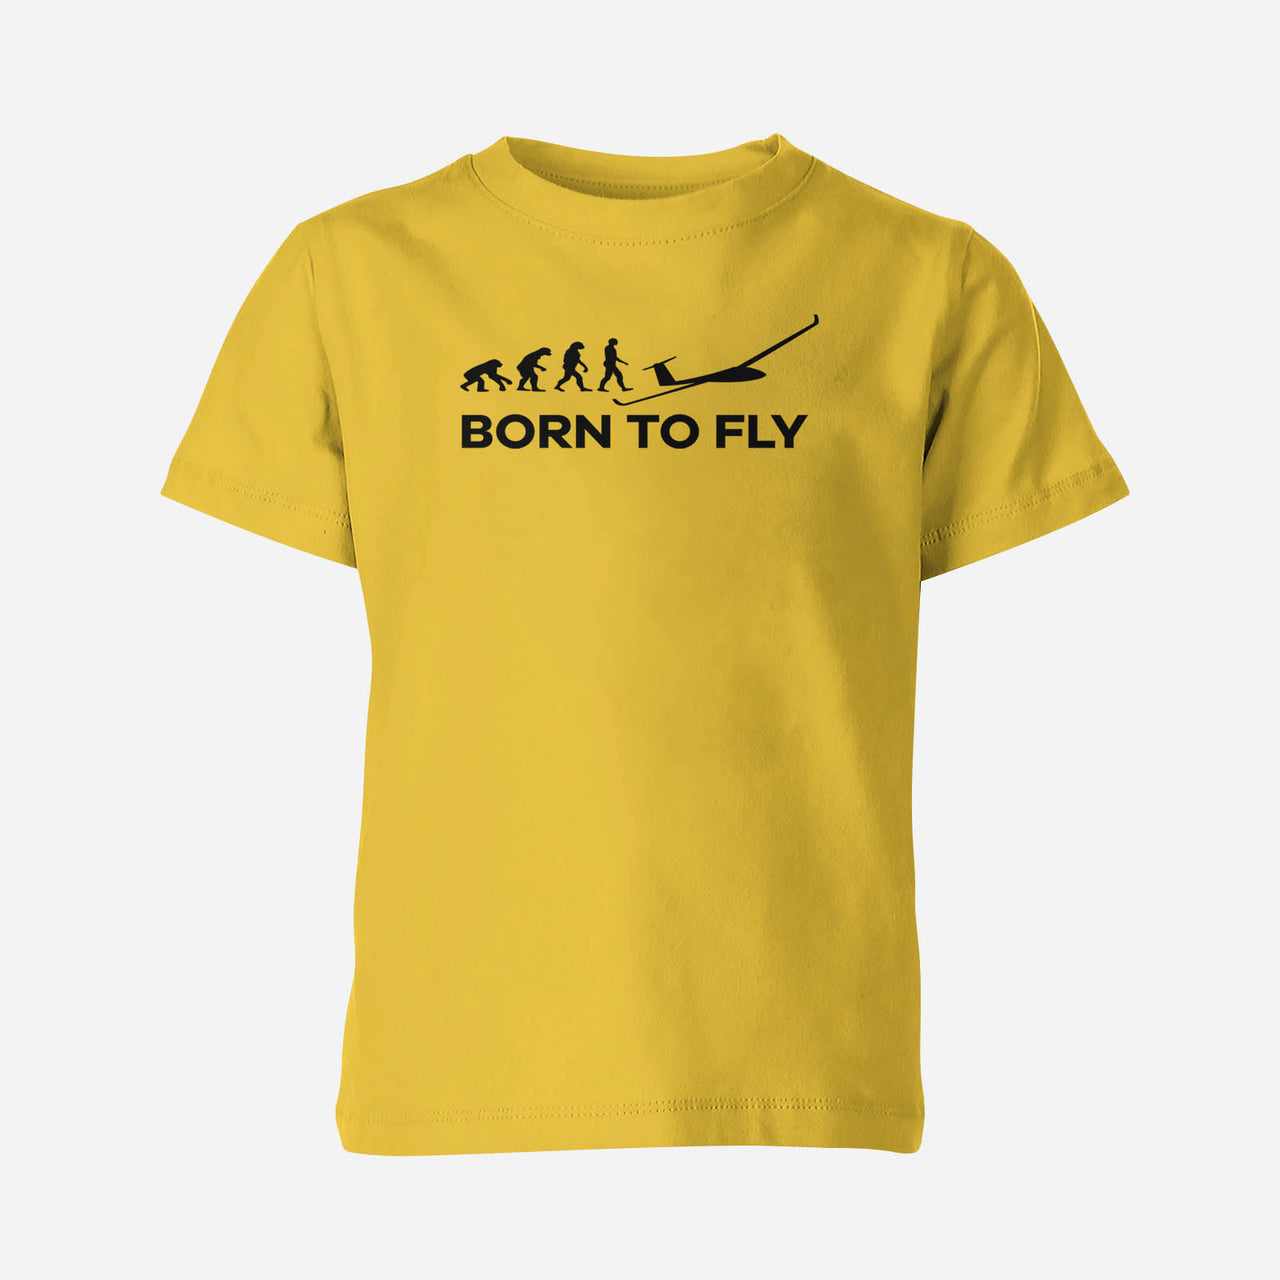 Born To Fly Glider Designed Children T-Shirts